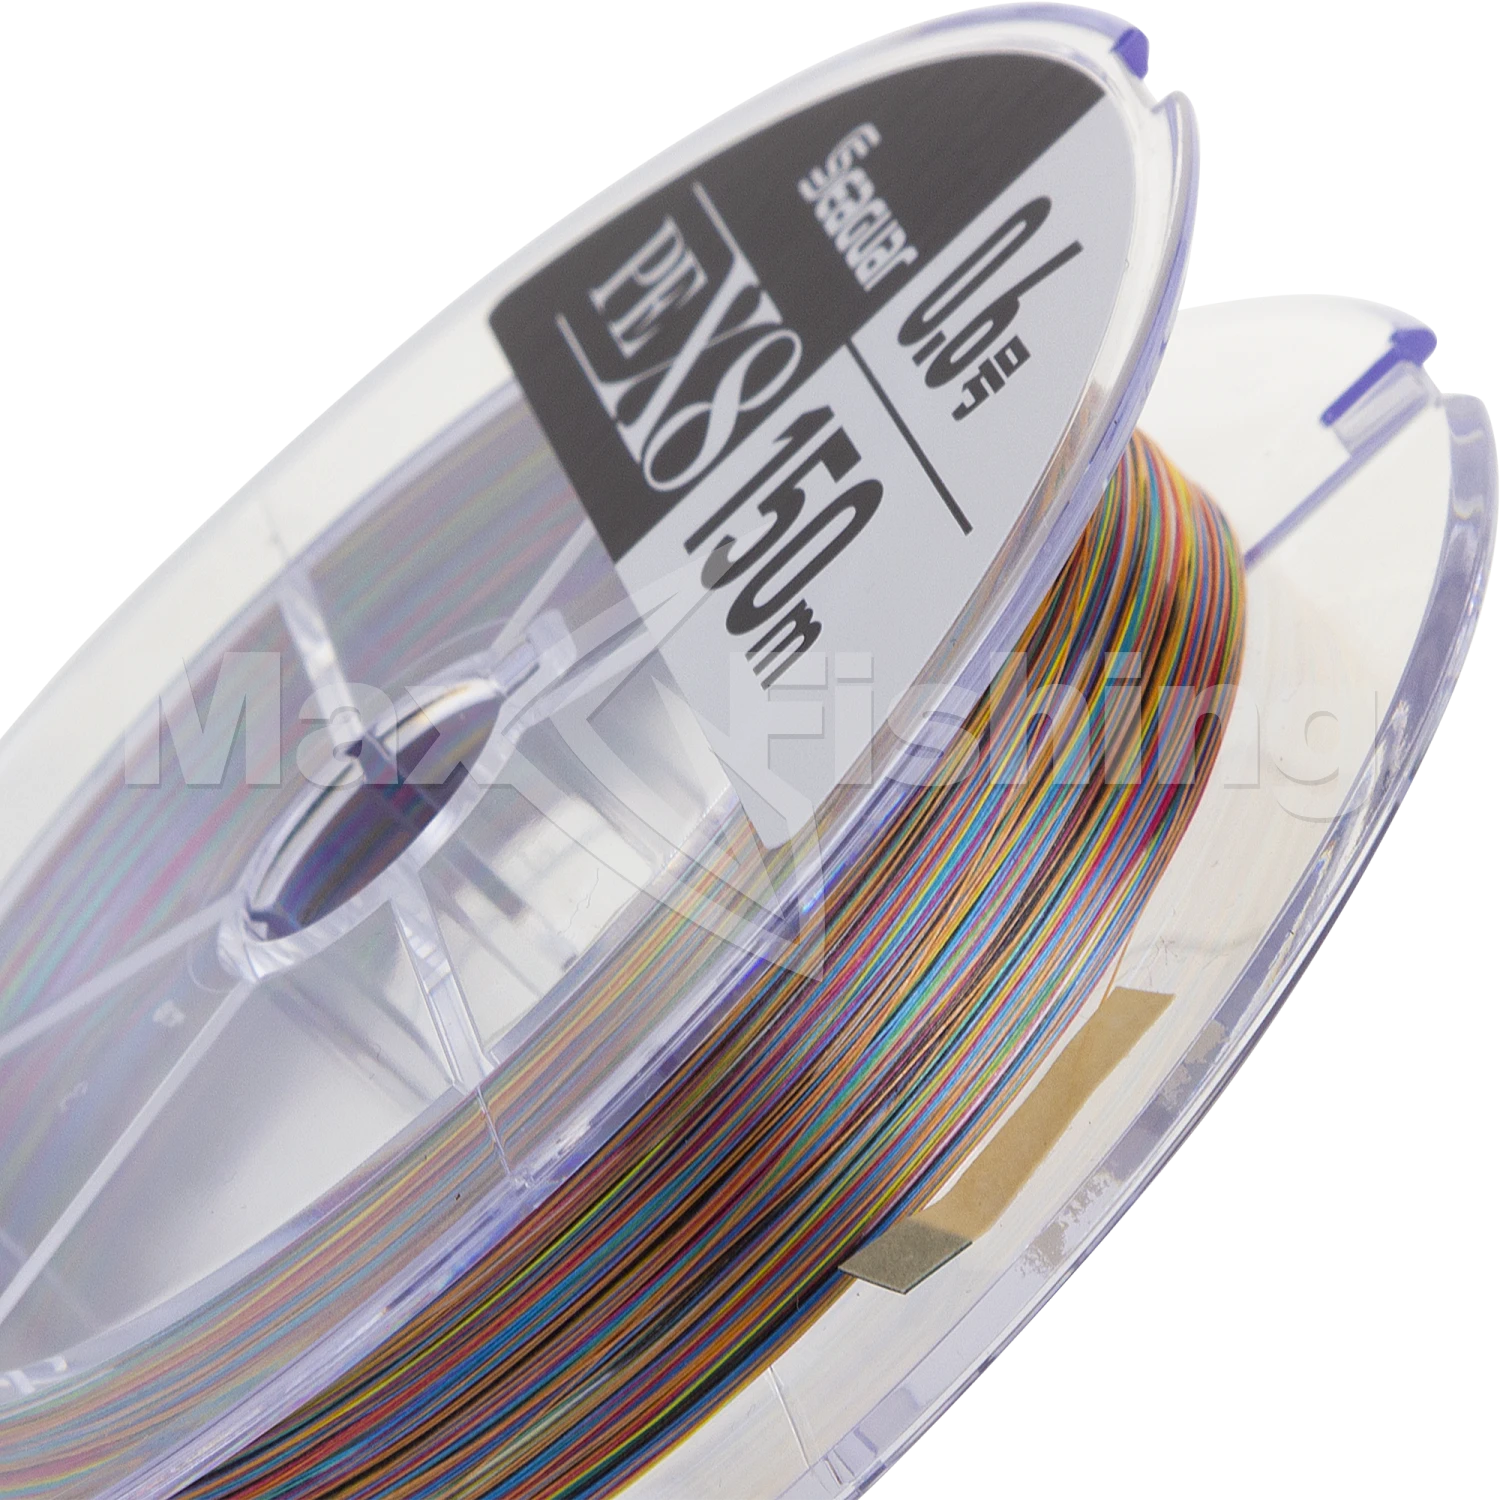 Шнур плетеный Seaguar PE X8 #0,6 0,128мм 150м (multicolor)